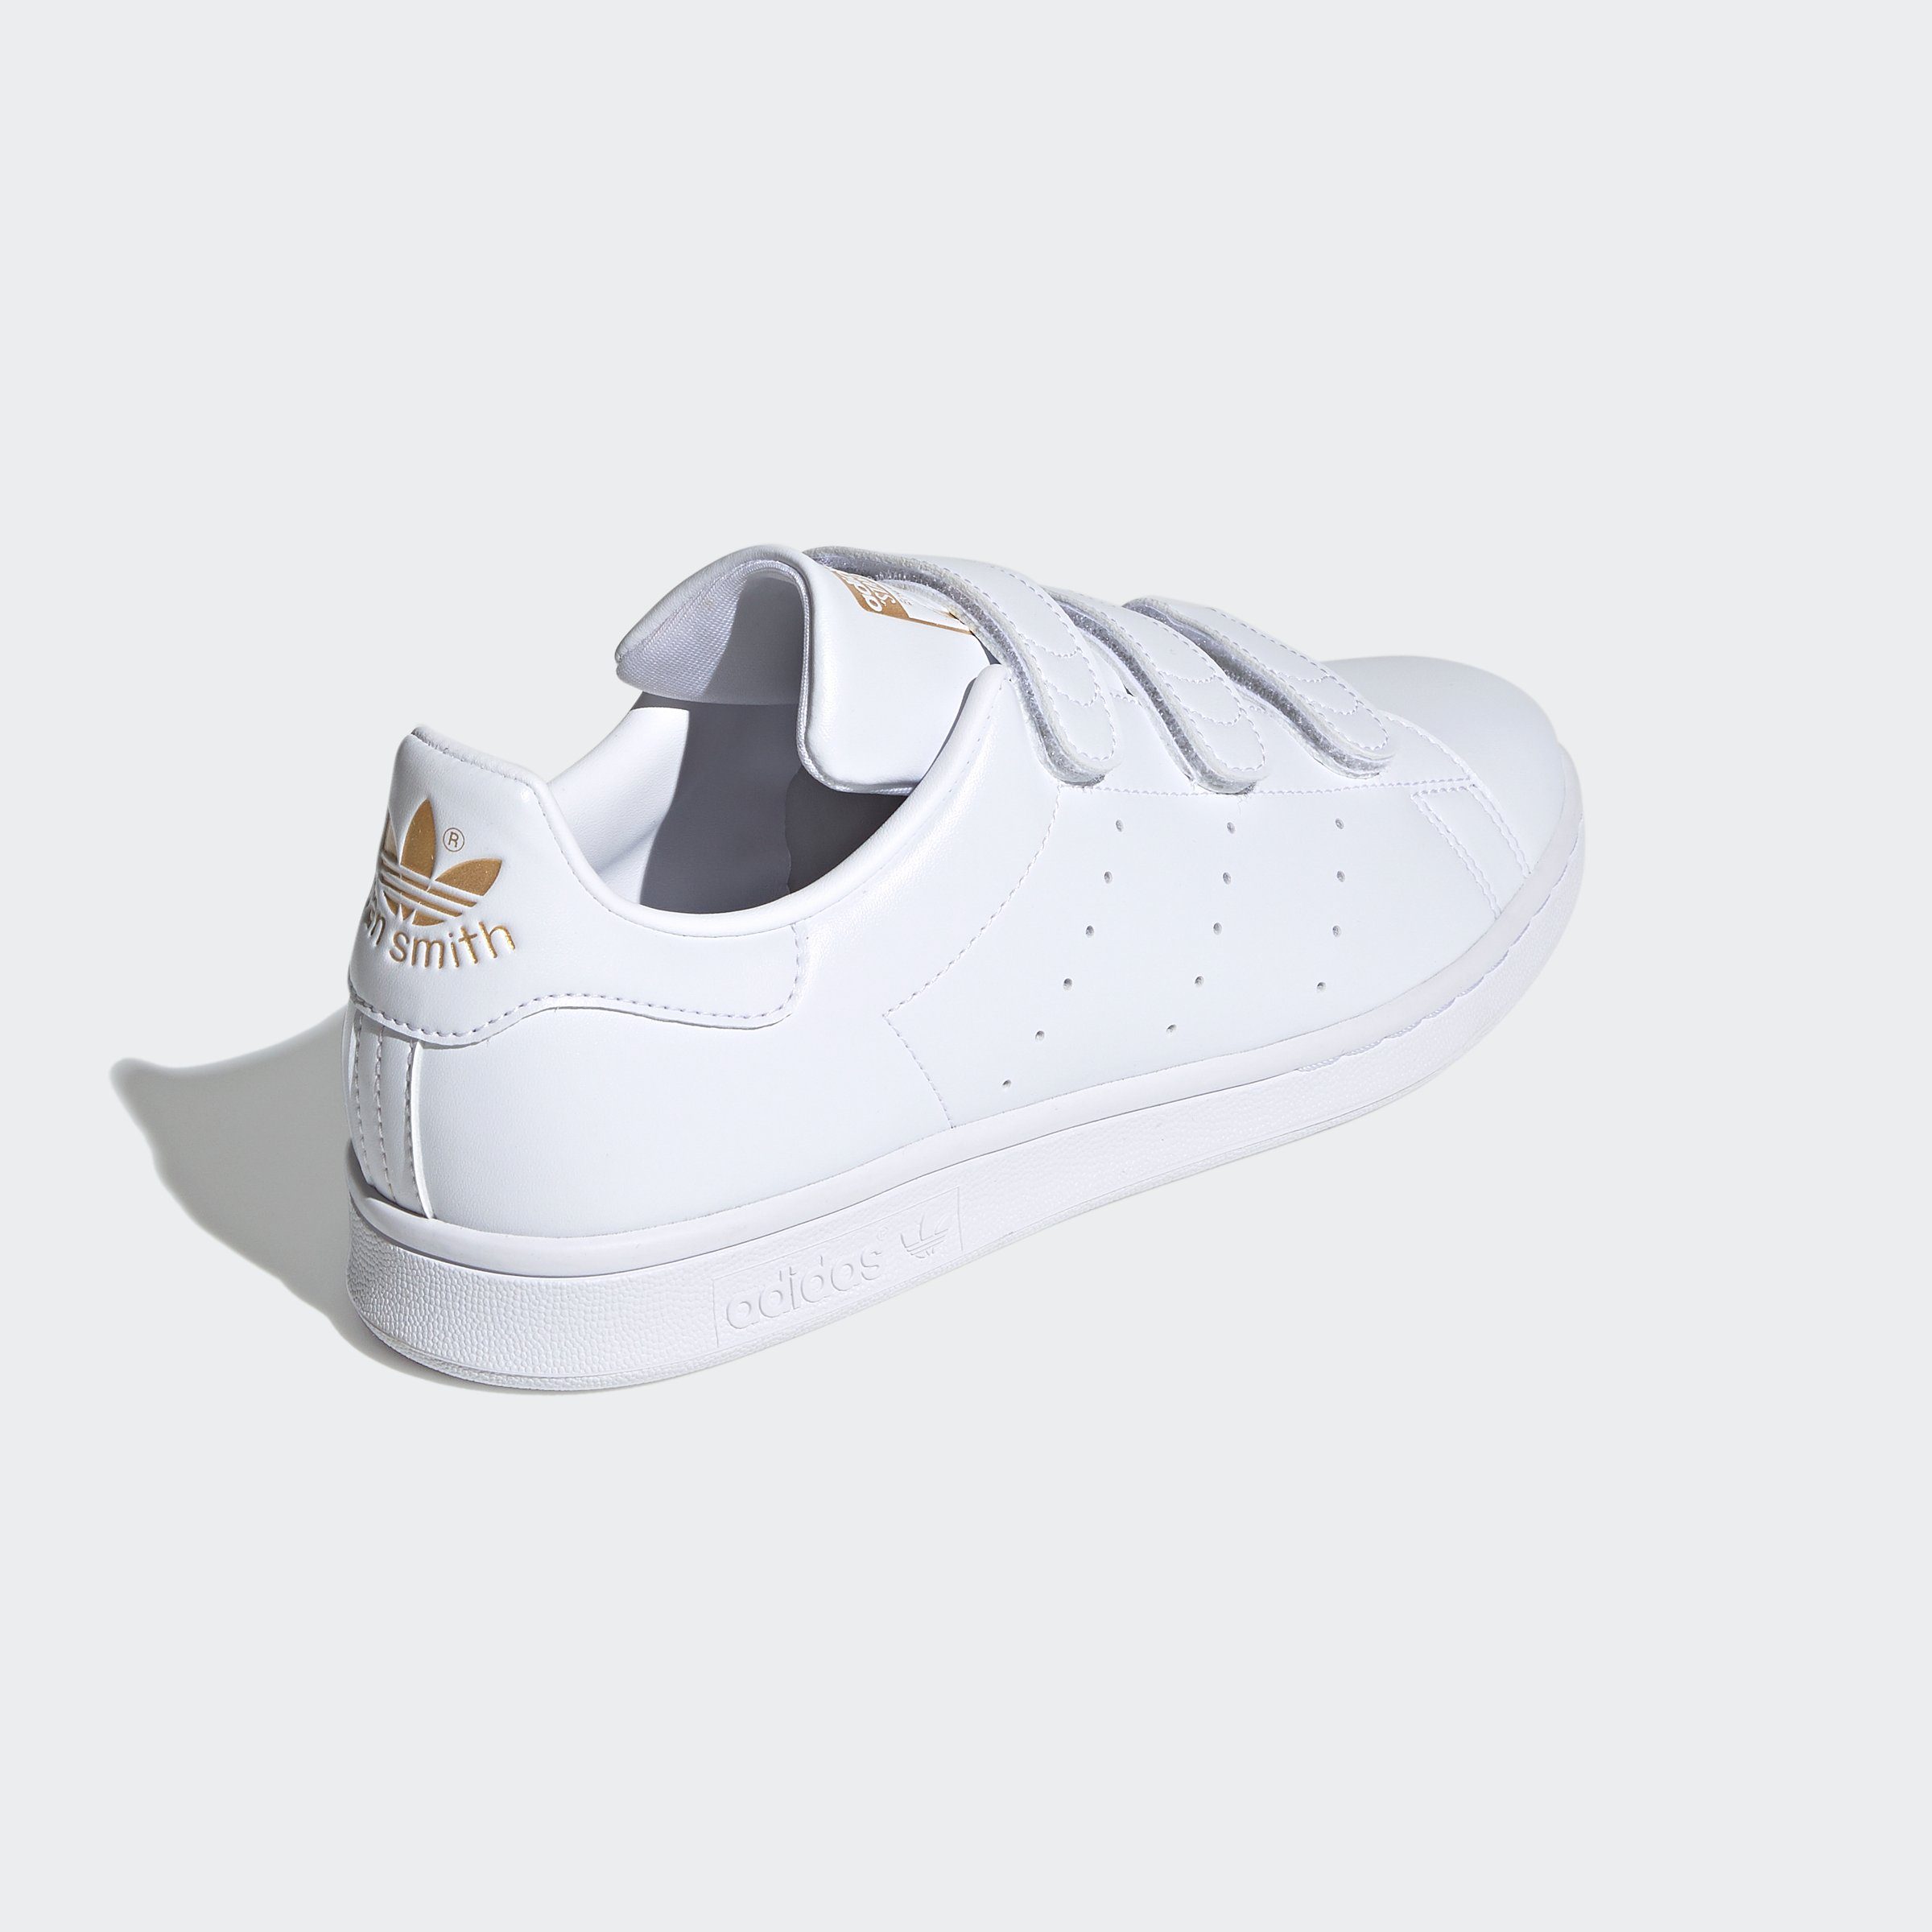 Metallic / adidas SMITH Gold Cloud Cloud Sneaker White Originals / White STAN